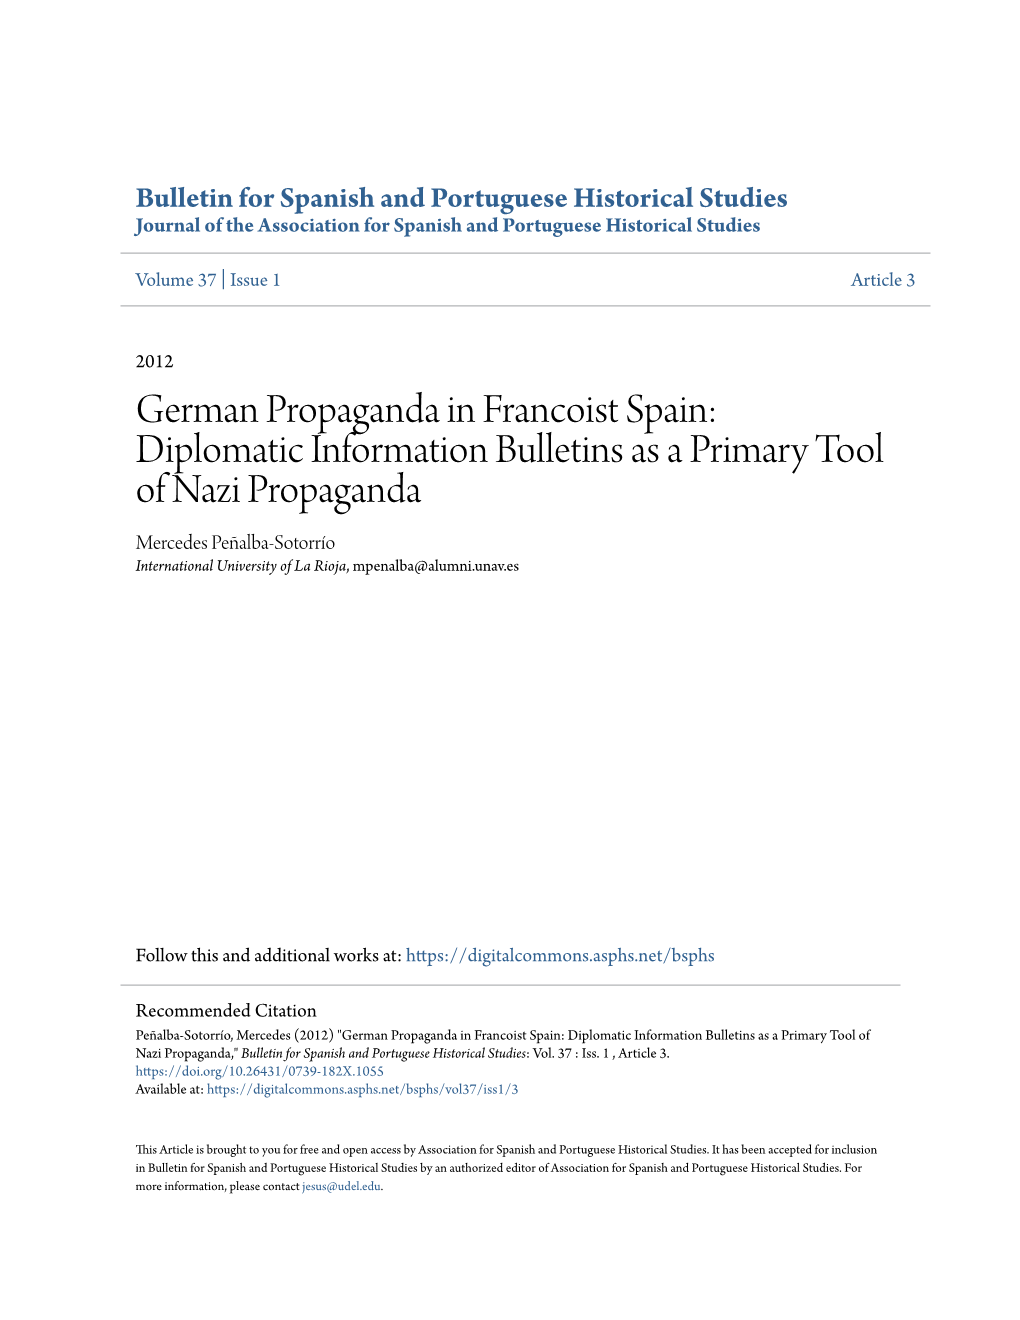 German Propaganda in Francoist Spain: Diplomatic Information Bulletins As a Primary Tool of Nazi Propaganda